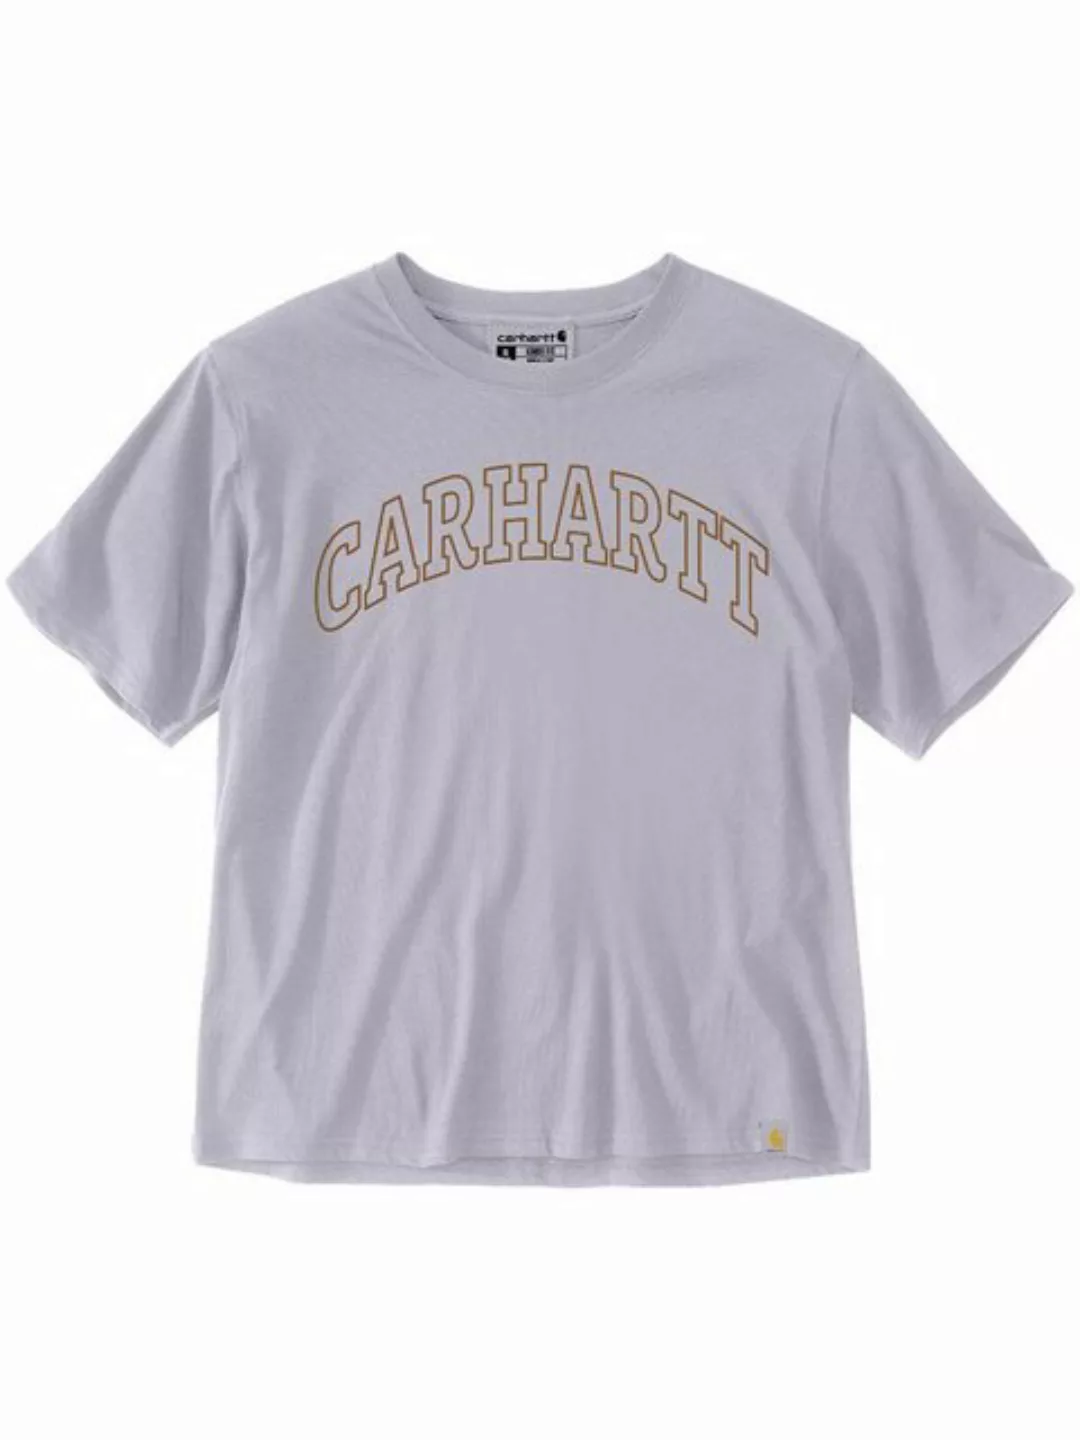 Carhartt T-Shirt 106186-V62 Carhartt Graphic günstig online kaufen